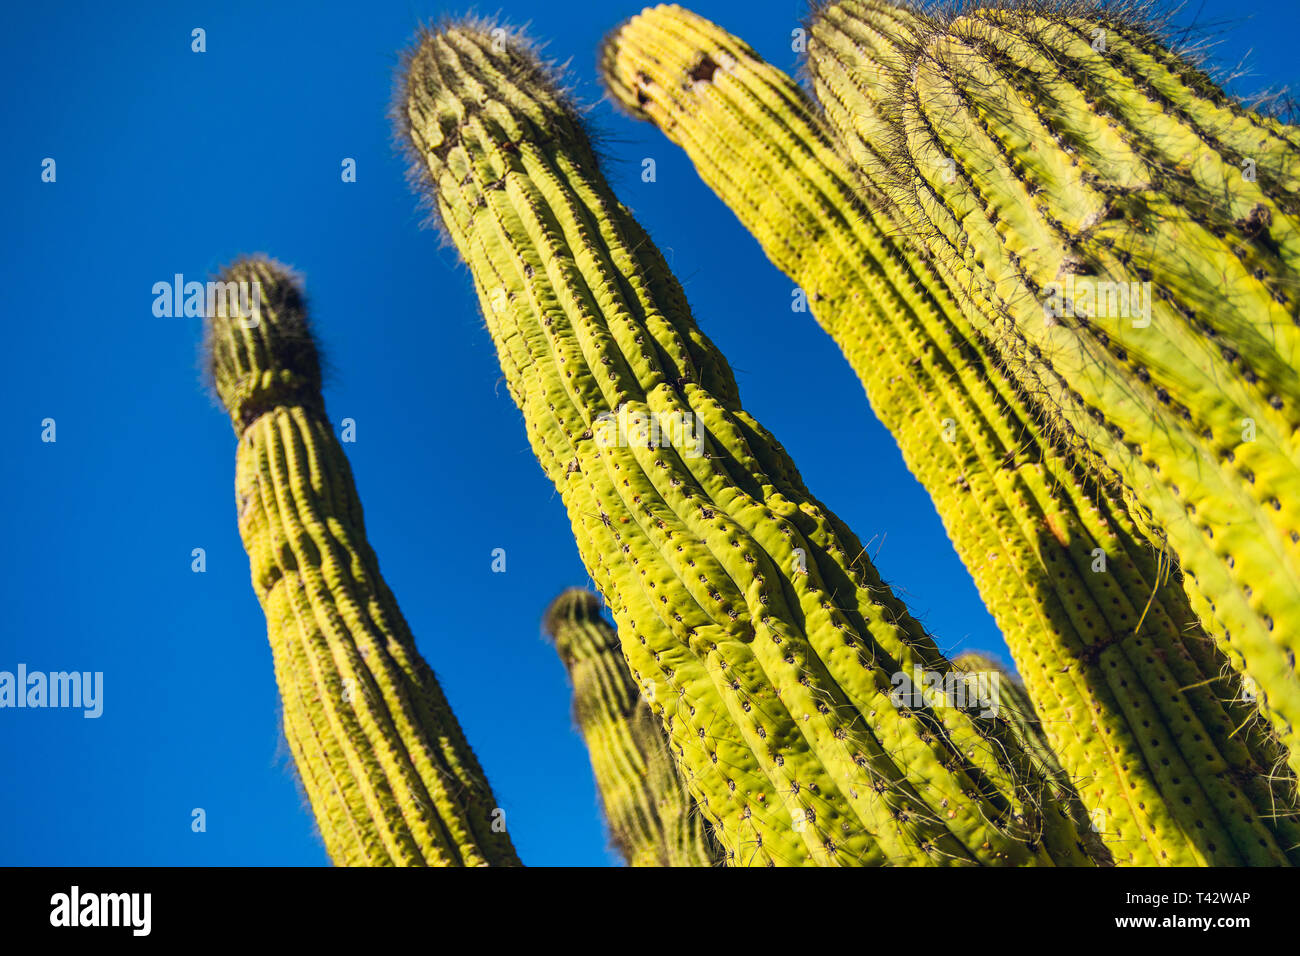 Cactus vicino, cielo blu in background. Wrigley Botanical Gardens & Memorial sull isola Catalina, California Foto Stock